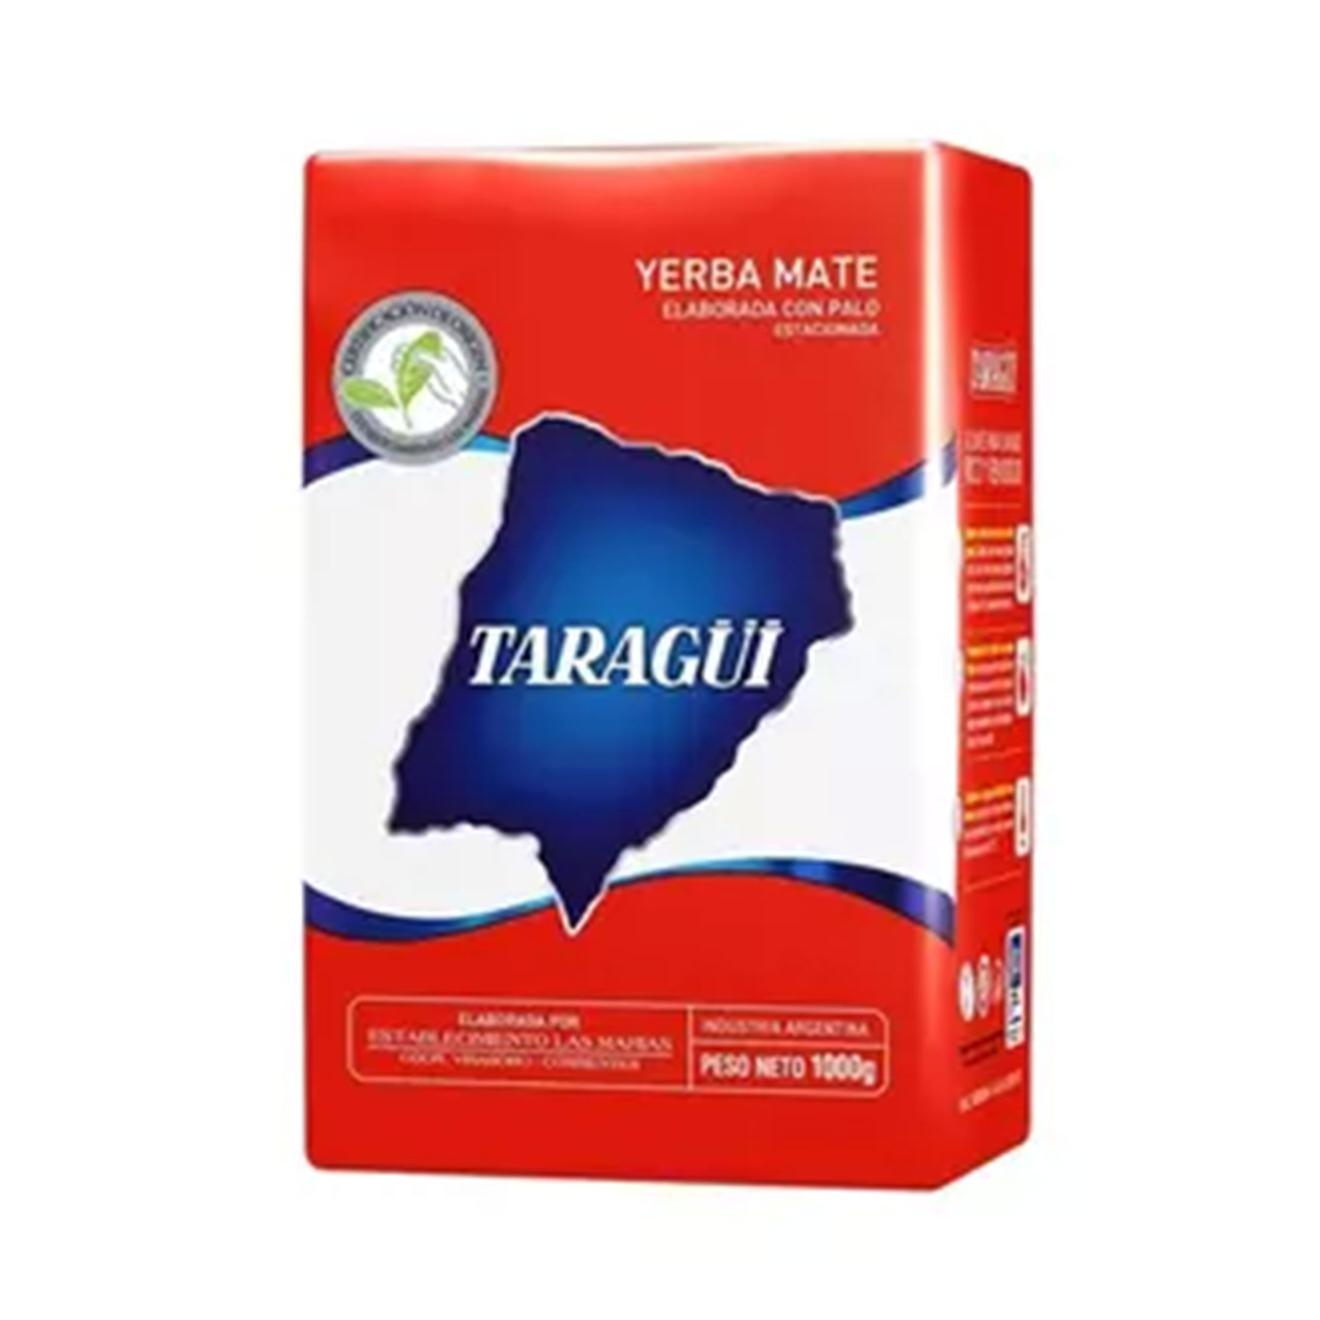 Oferta de Yerba mate Taragüi con palo origen controlado 1 kg. por $3450 en Carrefour